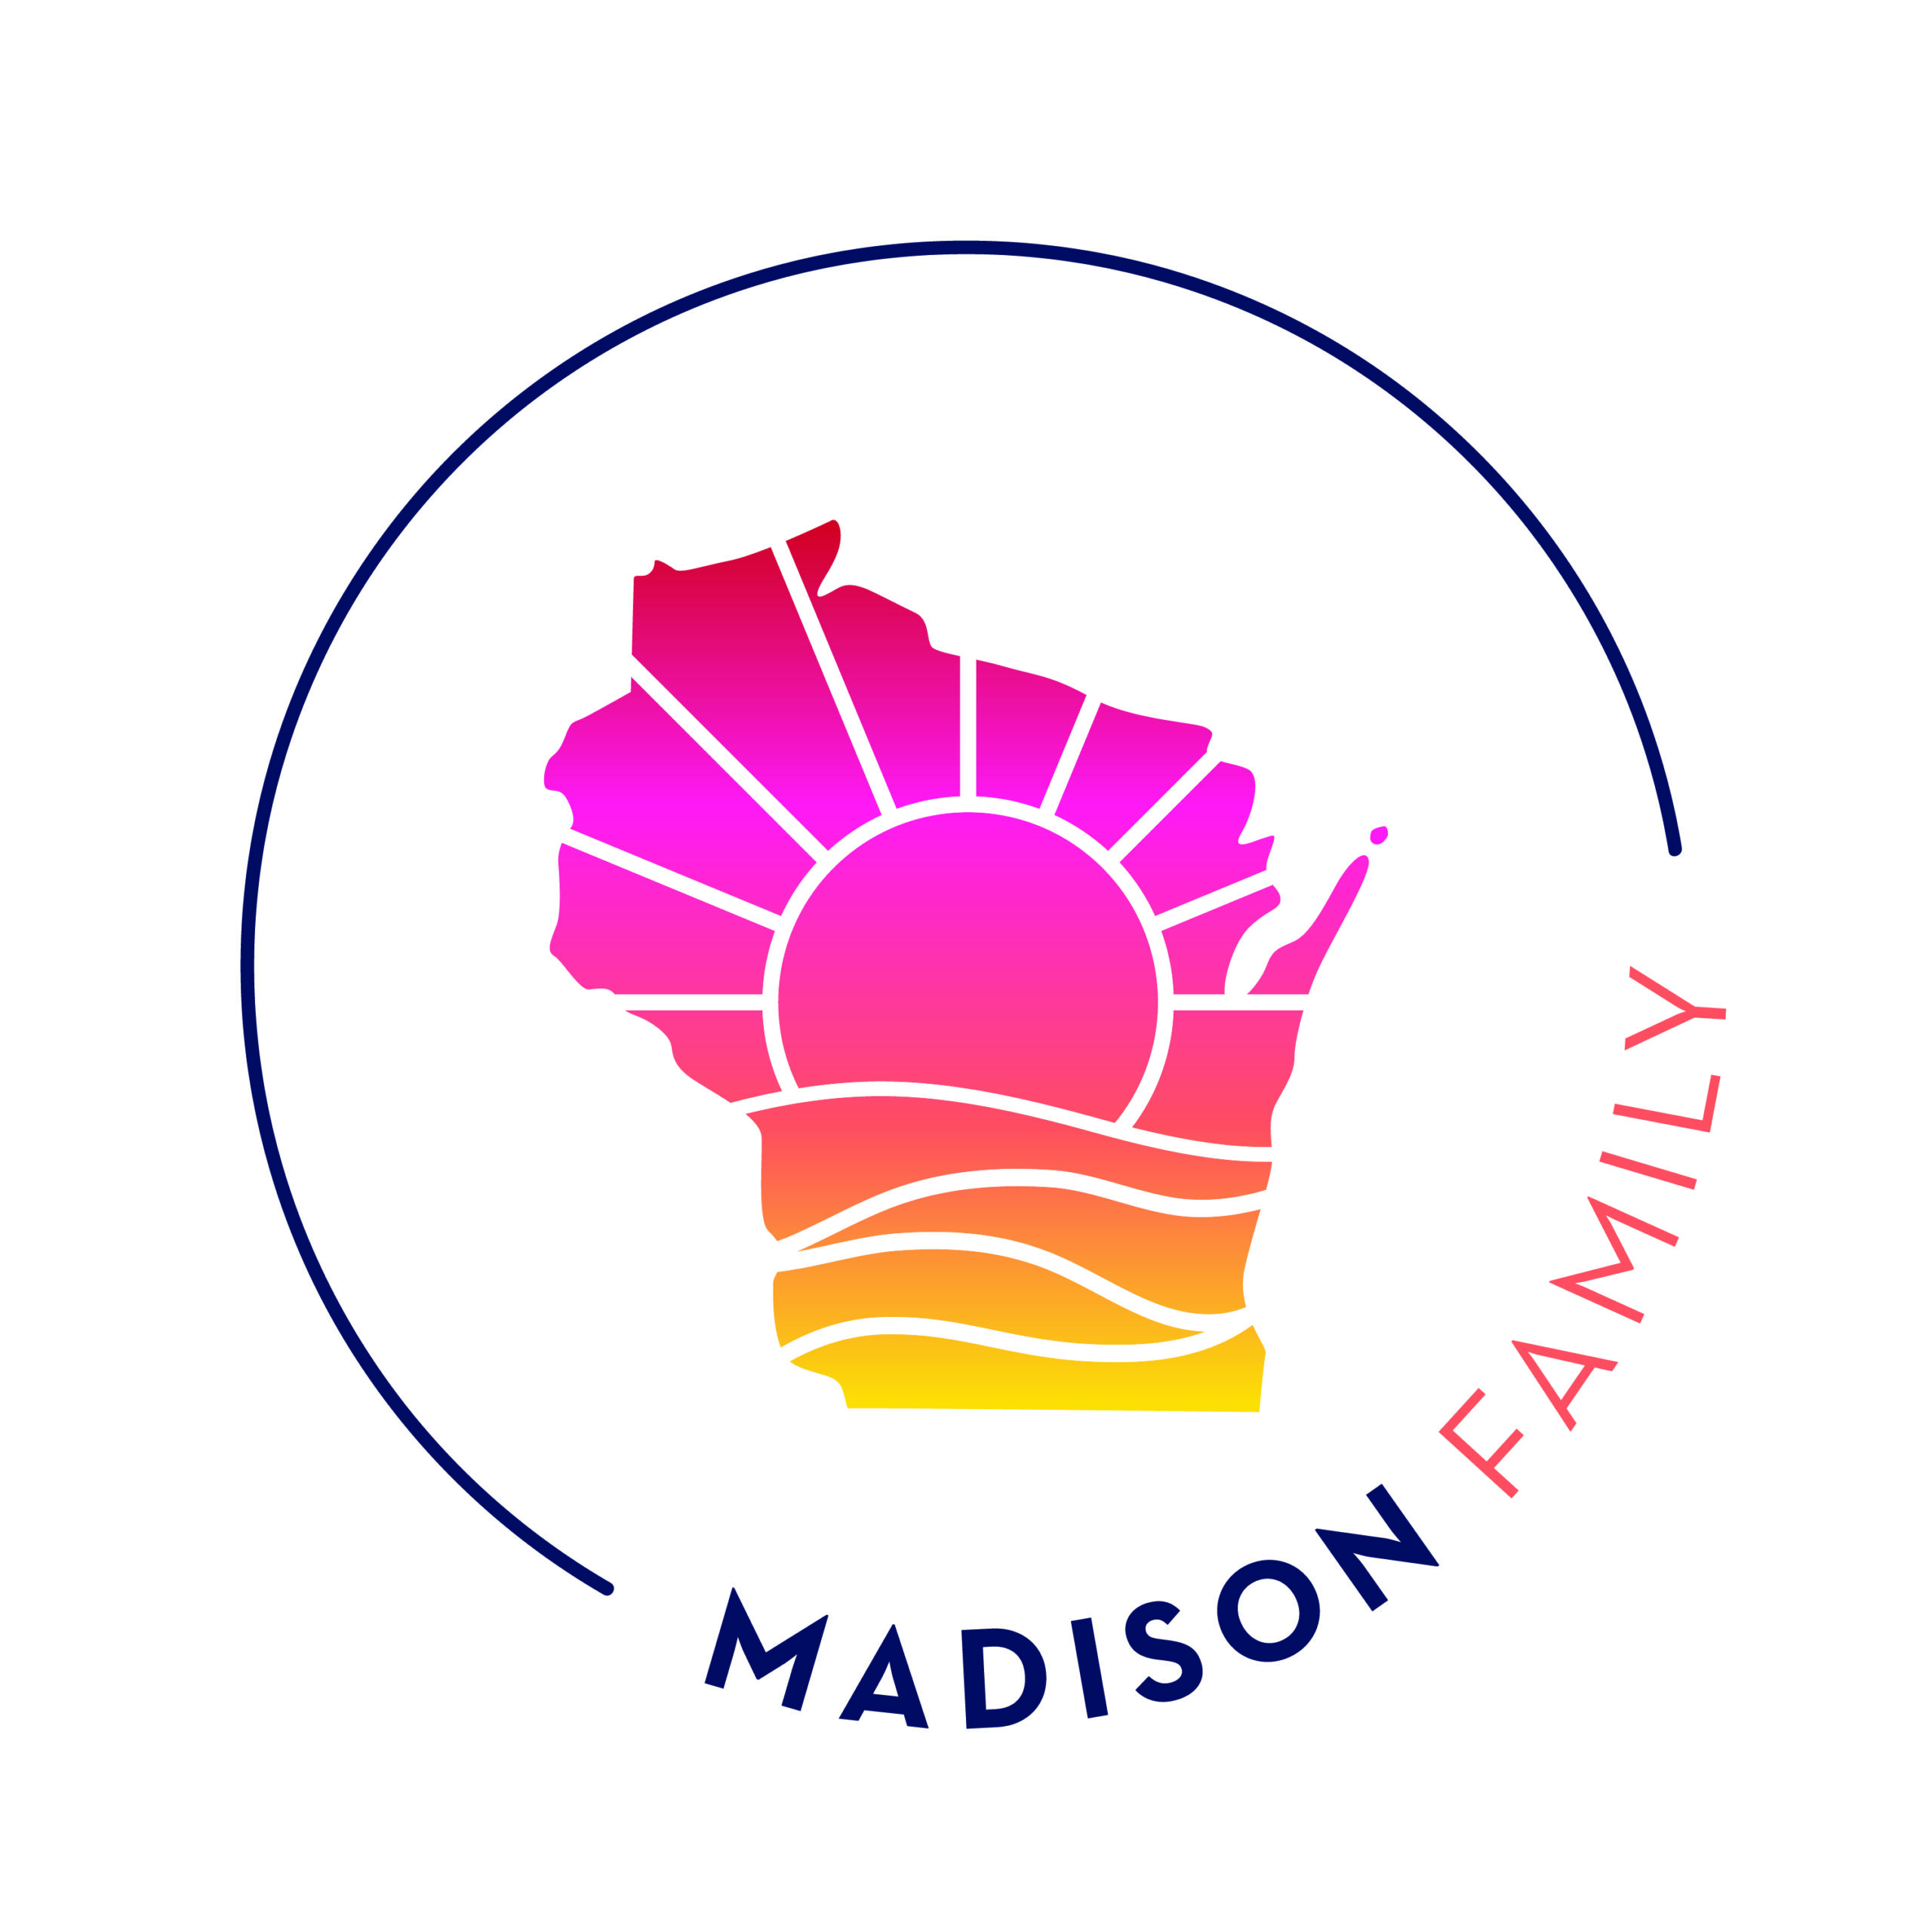 Madison Family